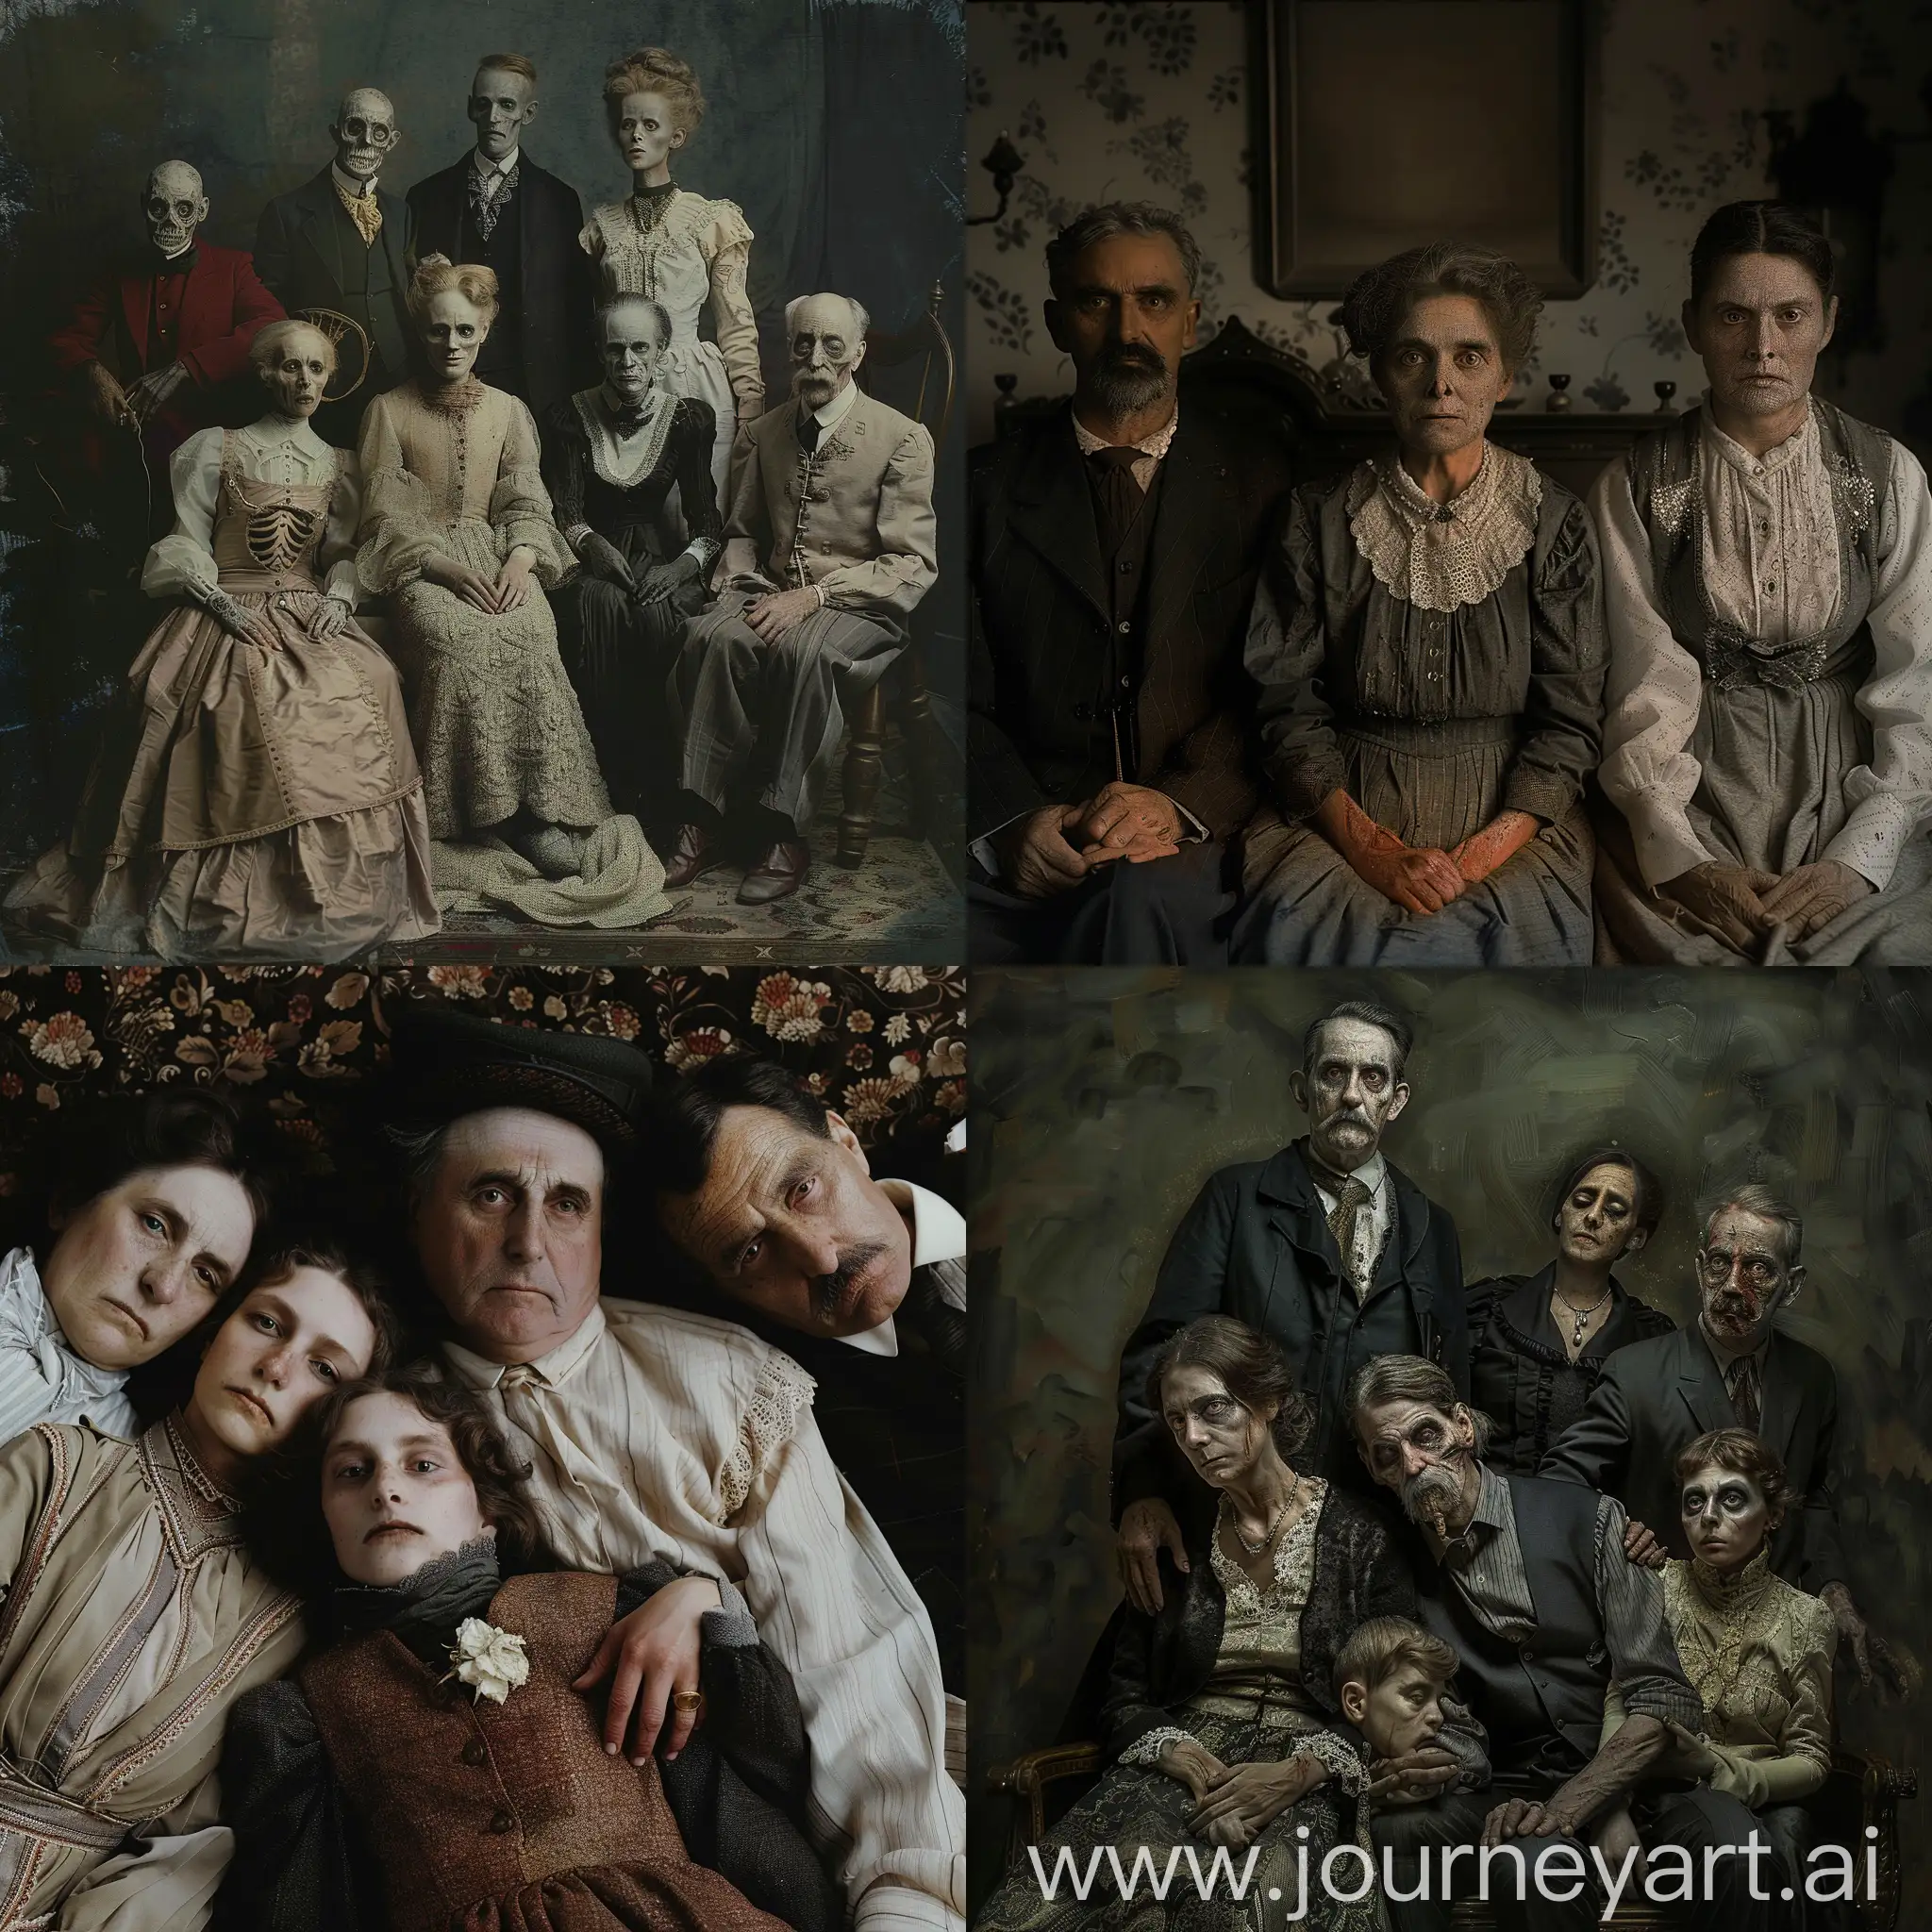 creepy family photo, creepy family members, dead, 1900's, colored, grainy, cinematic lighting, realistic image